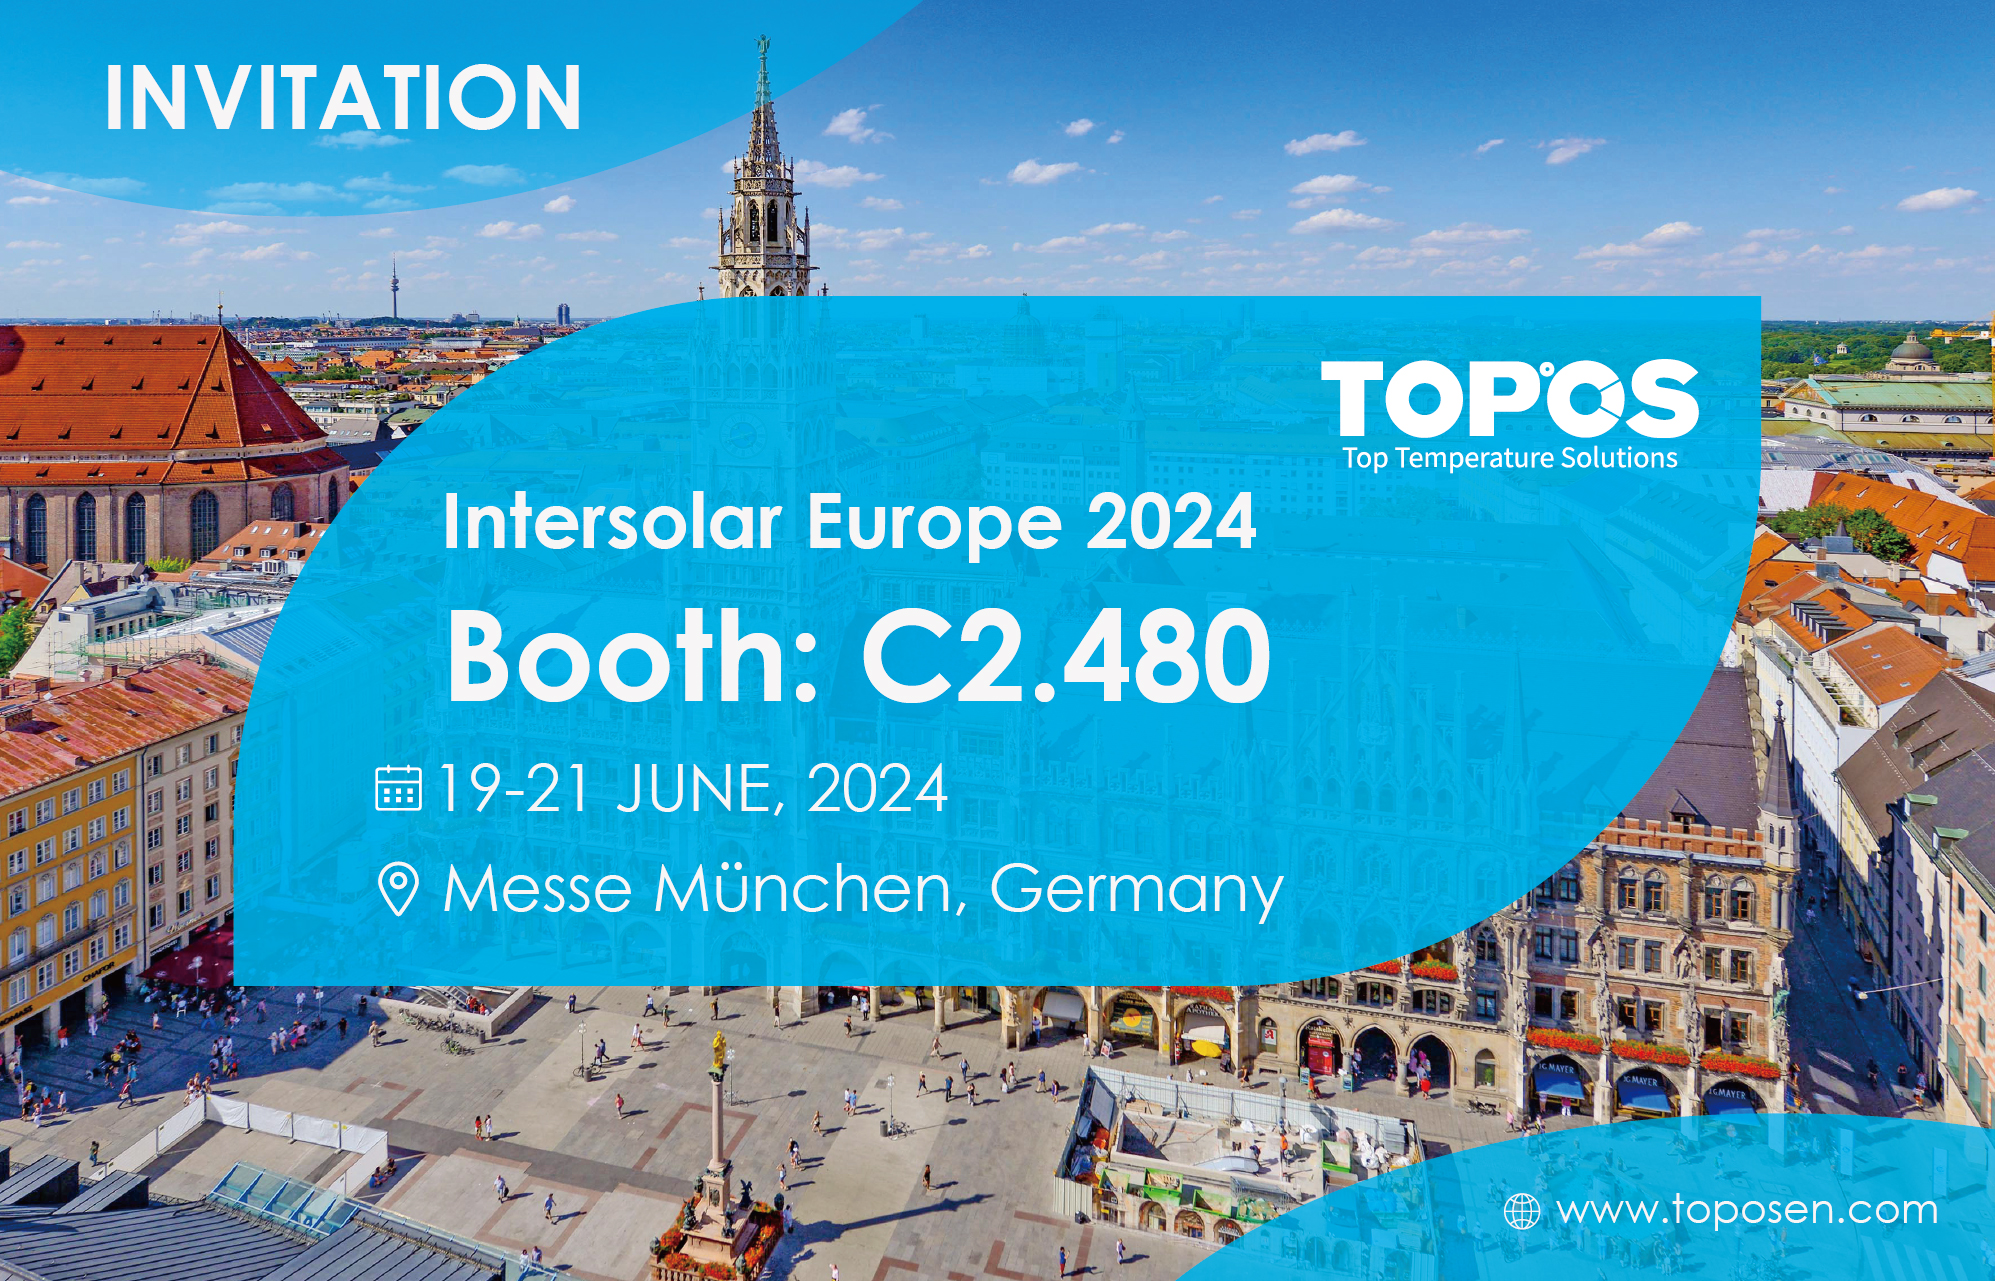 TOPOS invite you to attend Intersolar Europe 2024